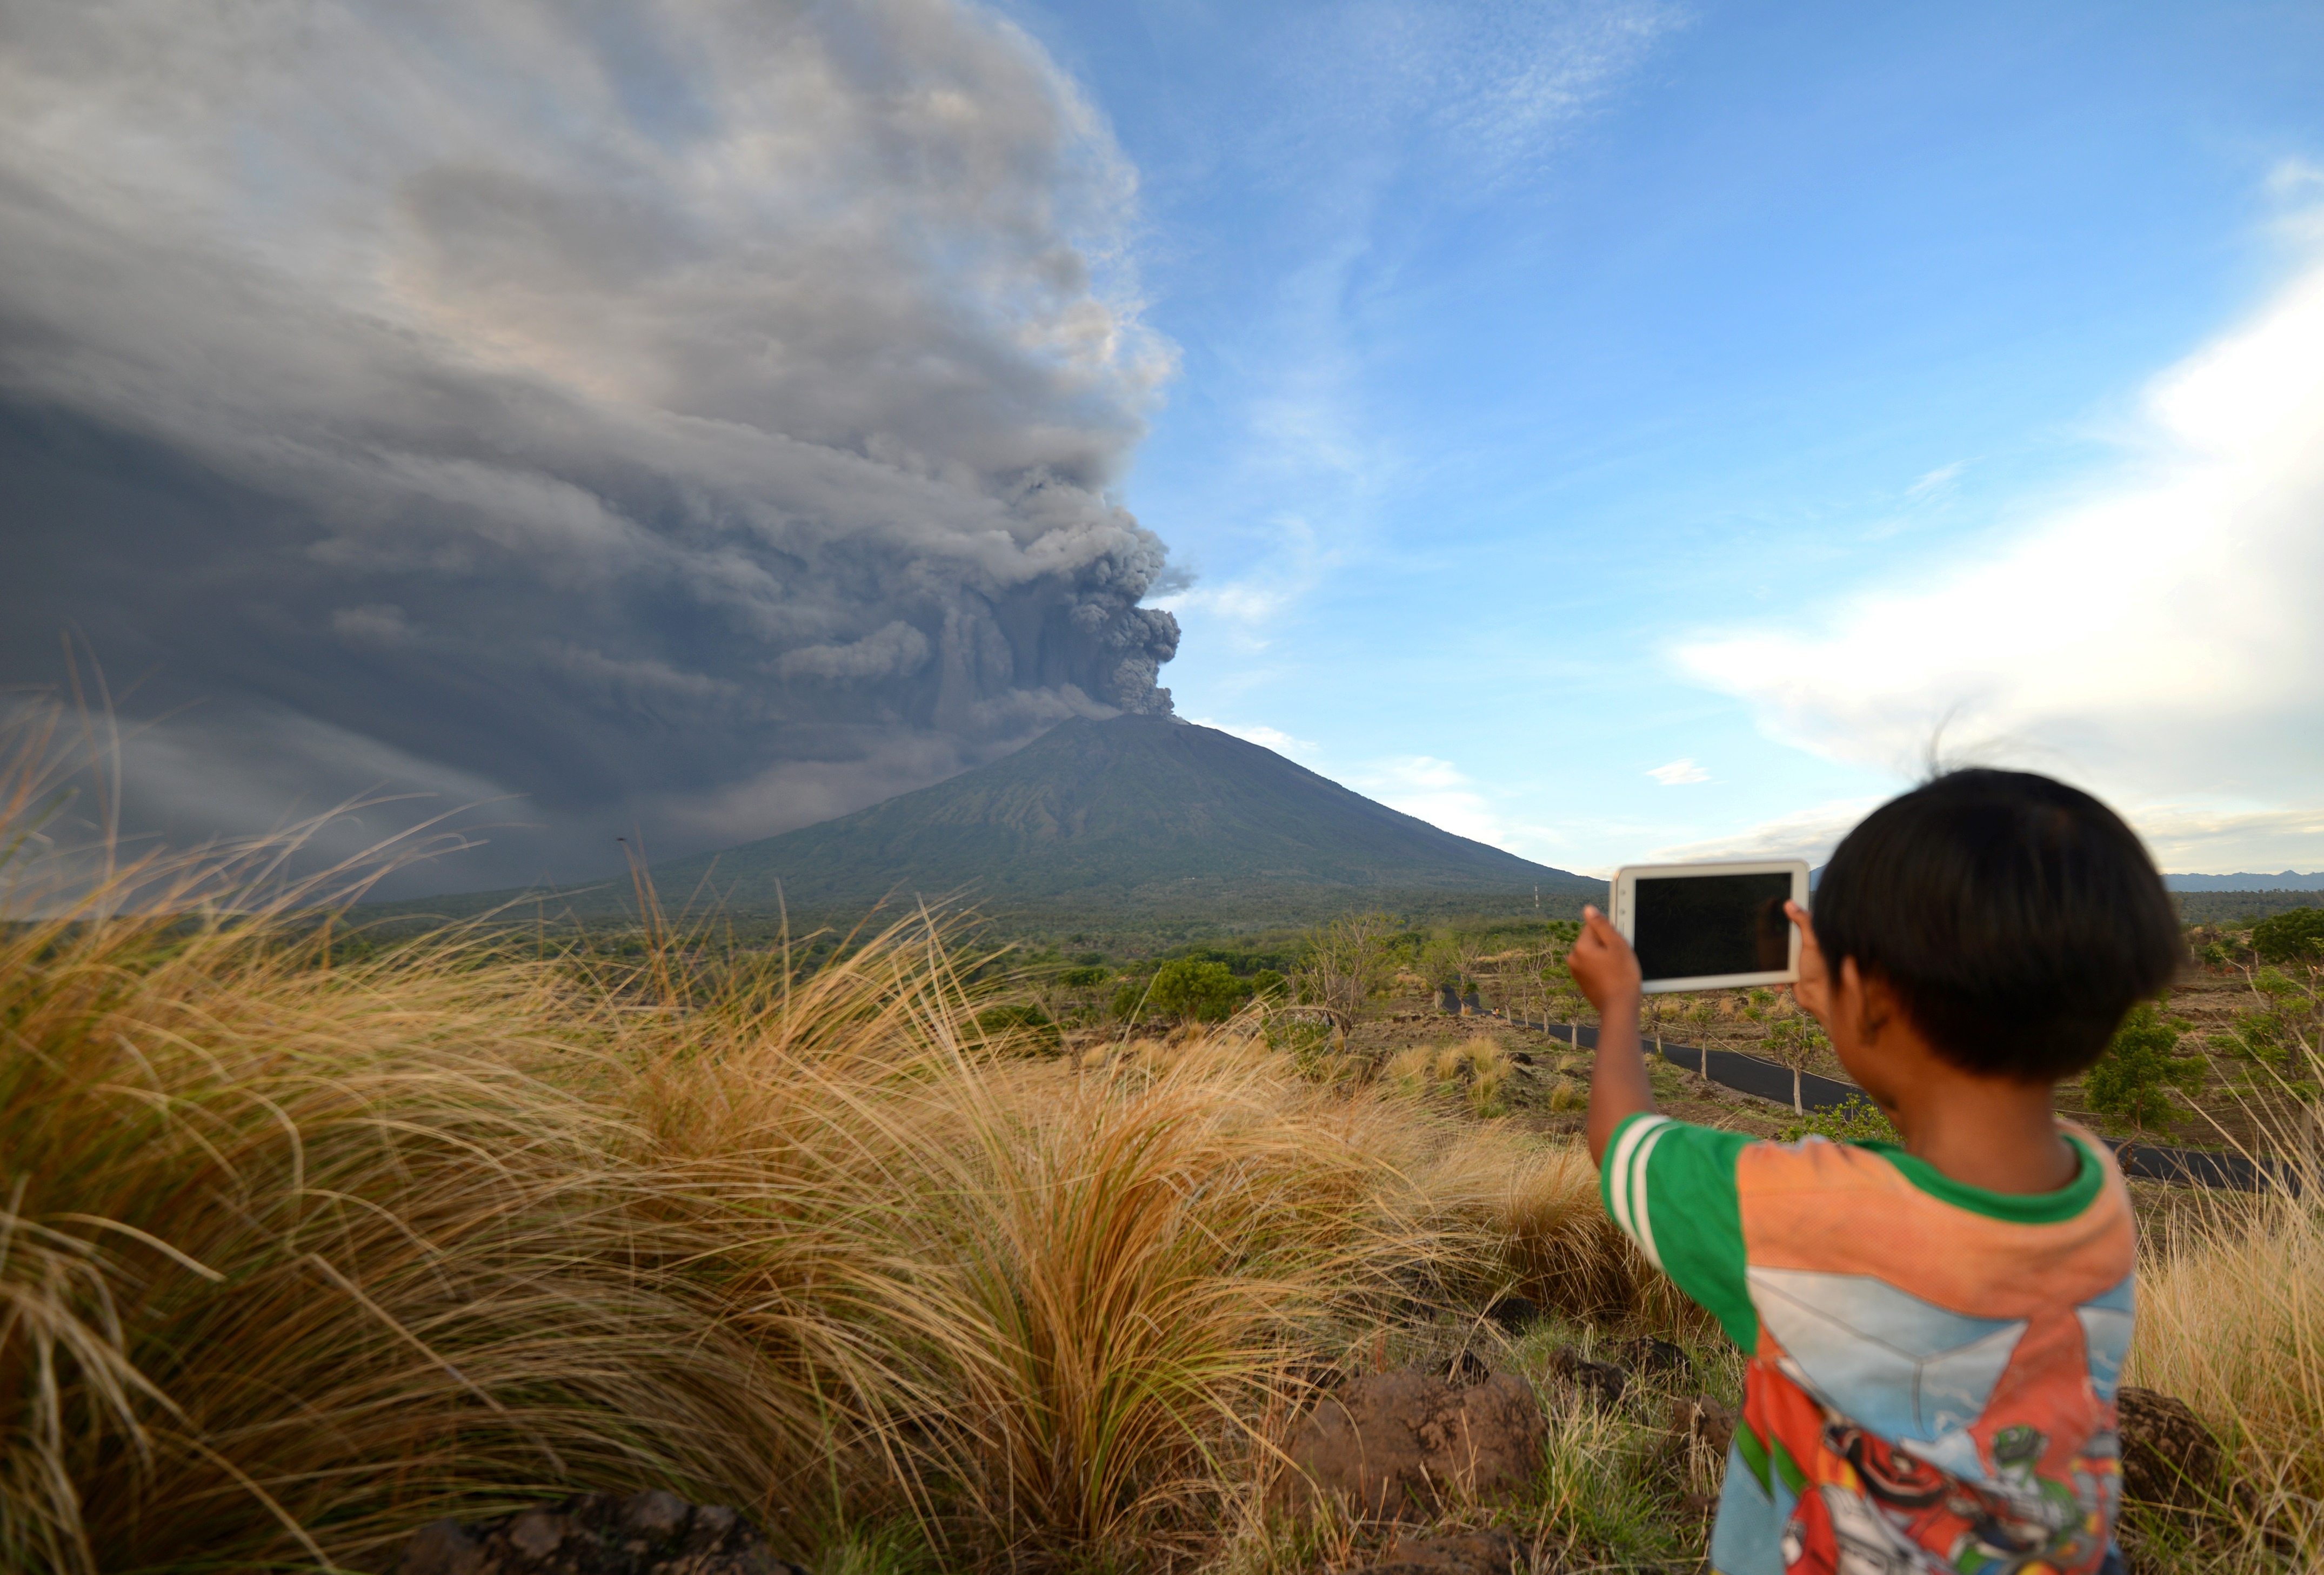 Bali Volcano Eruption Photos & Videos From the Scene